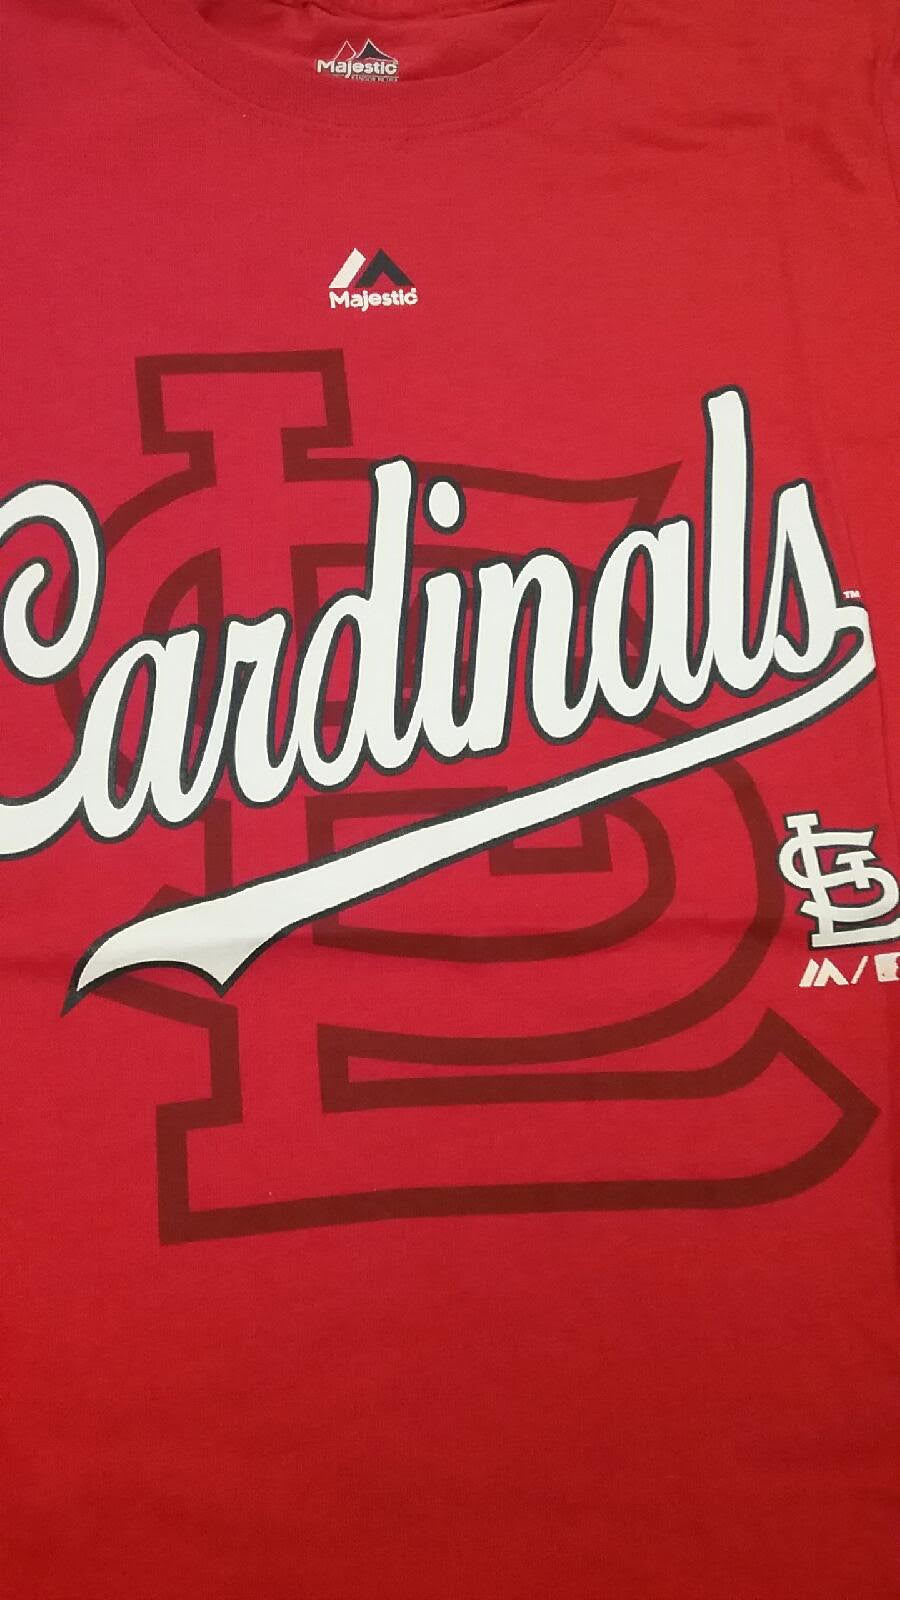 St. Louis Cardinals Youth Shirt